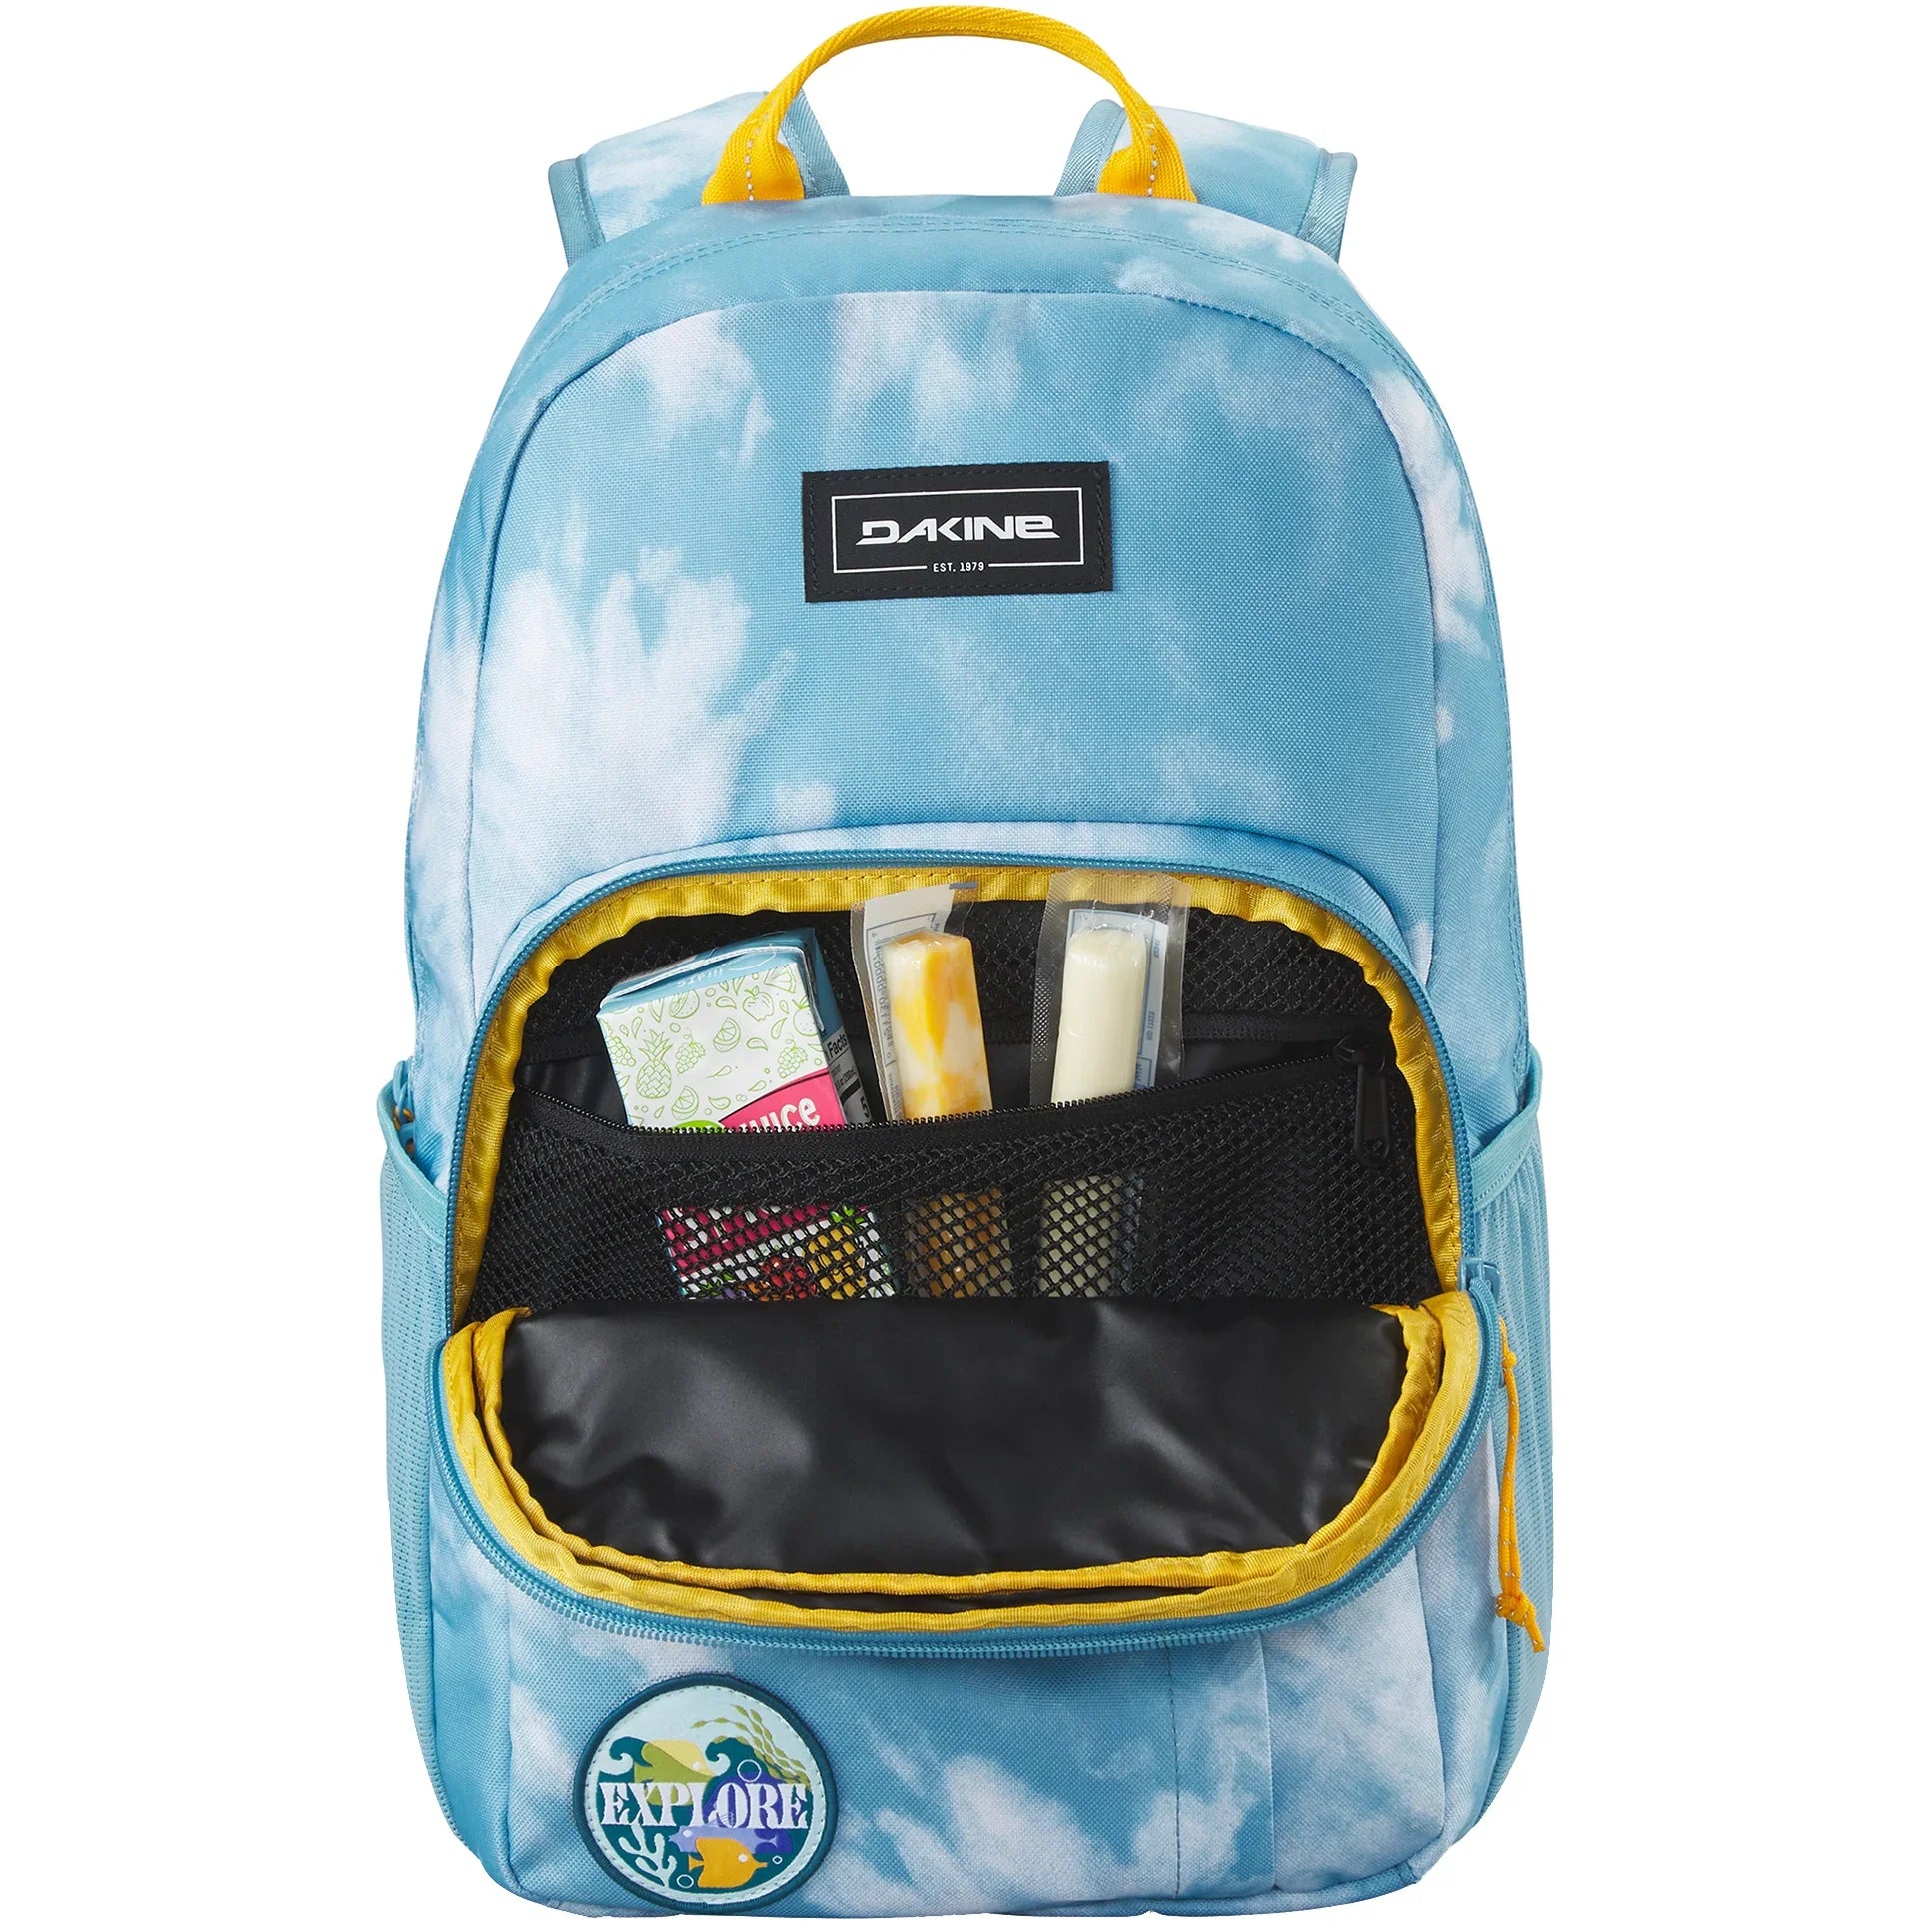 Dakine Packs & Bags Kids Campus 18L Backpack 41 cm - Grapevine